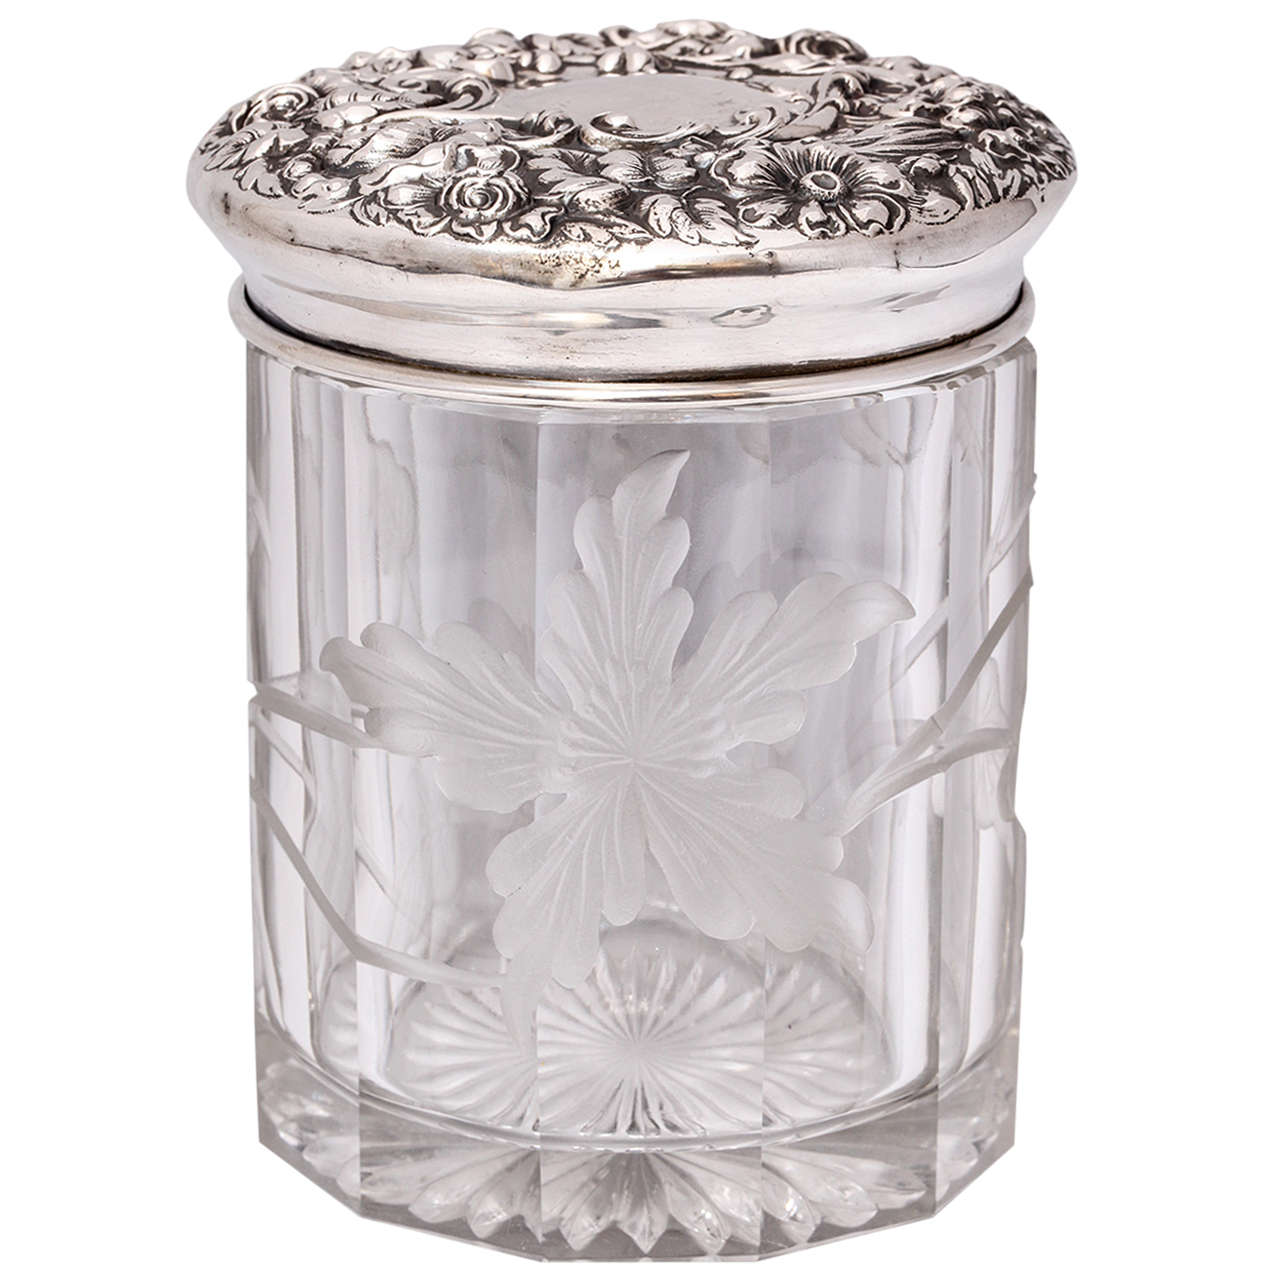 Art Nouveau Sterling Silver-Mounted "Moser" Intaglio Cut Dresser Jar or Humidor